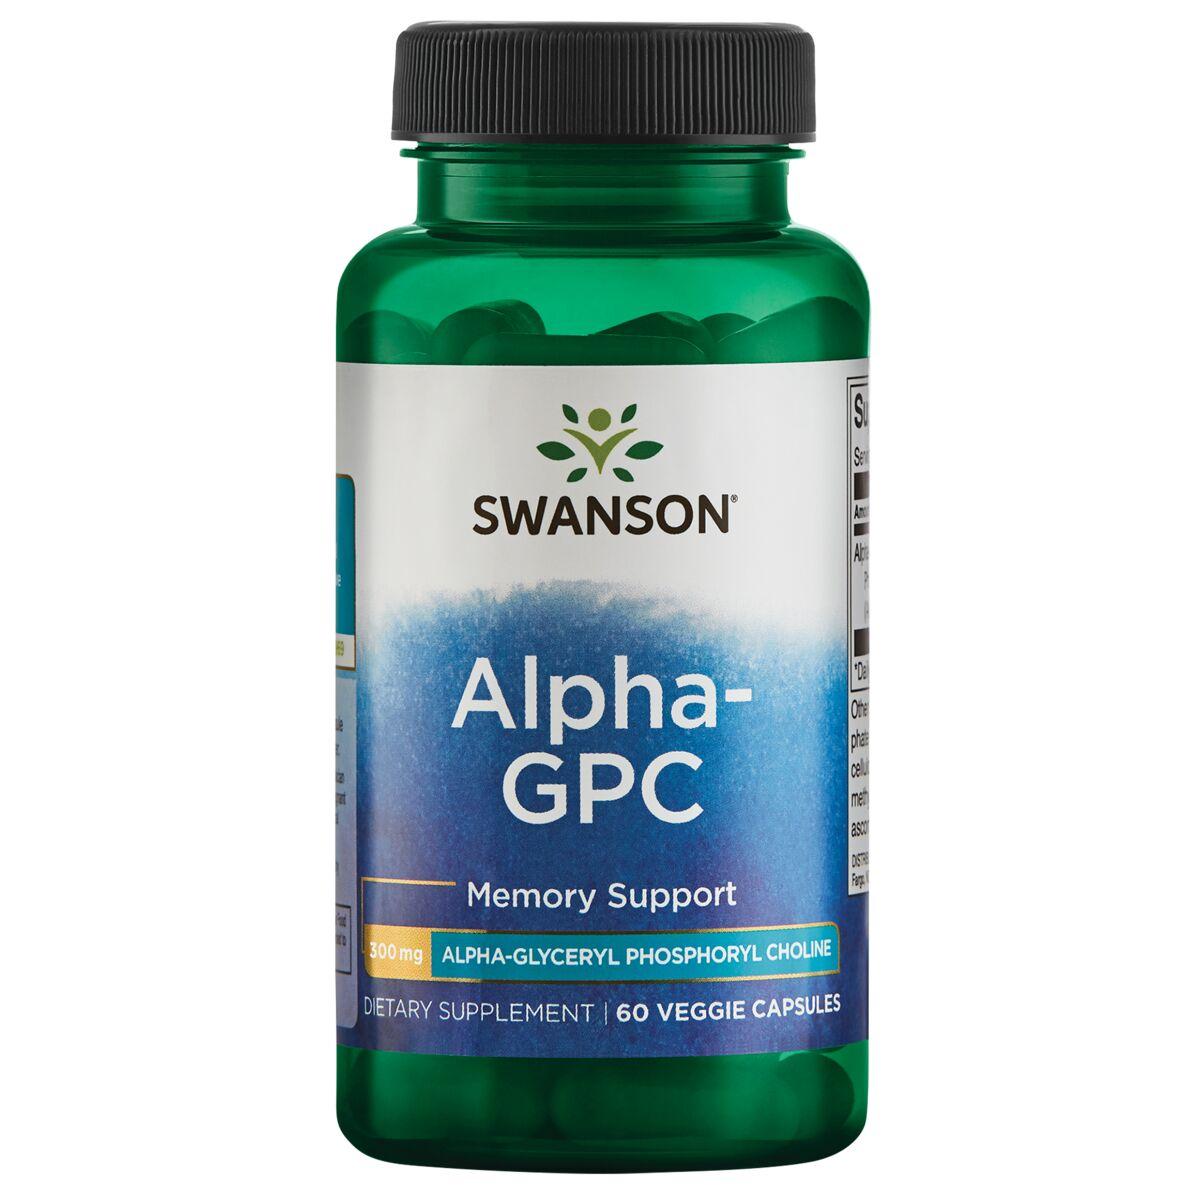 Swanson Ultra Alpha-Gpc Alpha-Glyceryl Phosphoryl Choline Supplement Vitamin | 300 mg | 60 Veg Caps